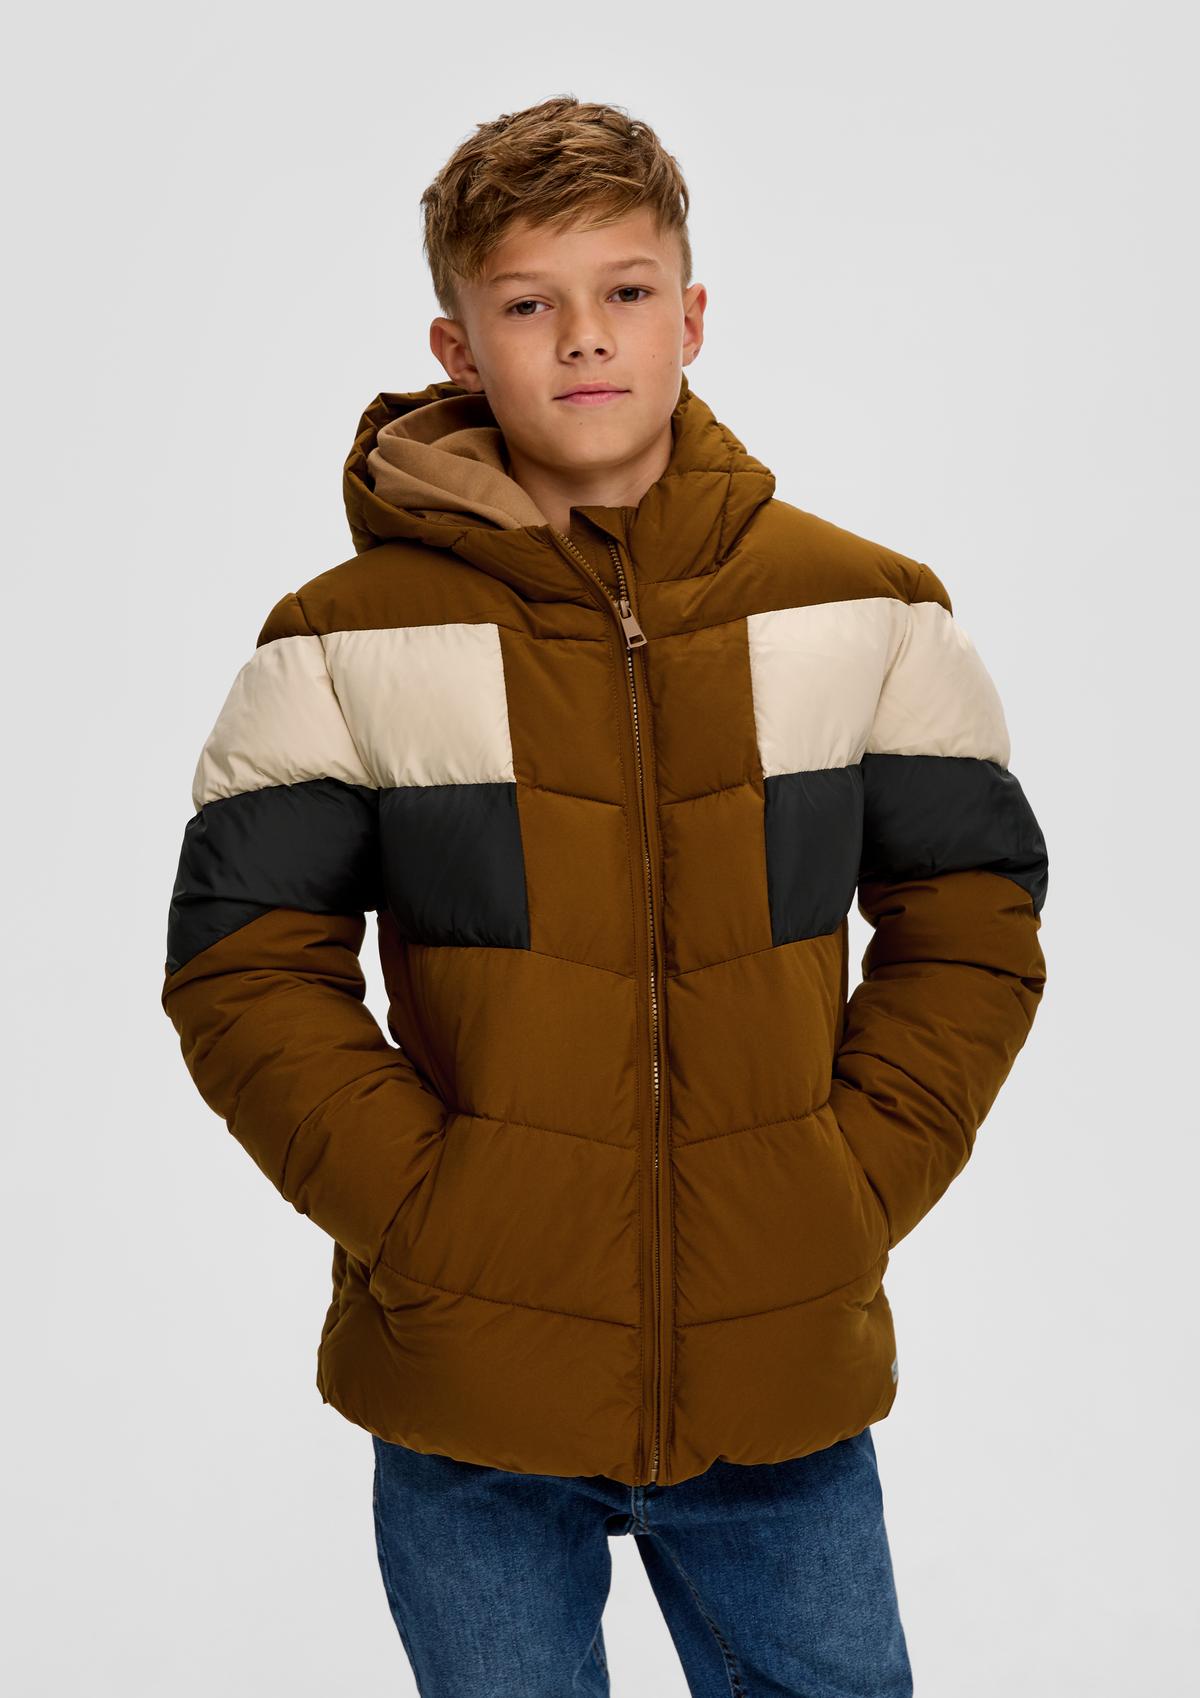 Prošivena jakna u colour blocking stilu